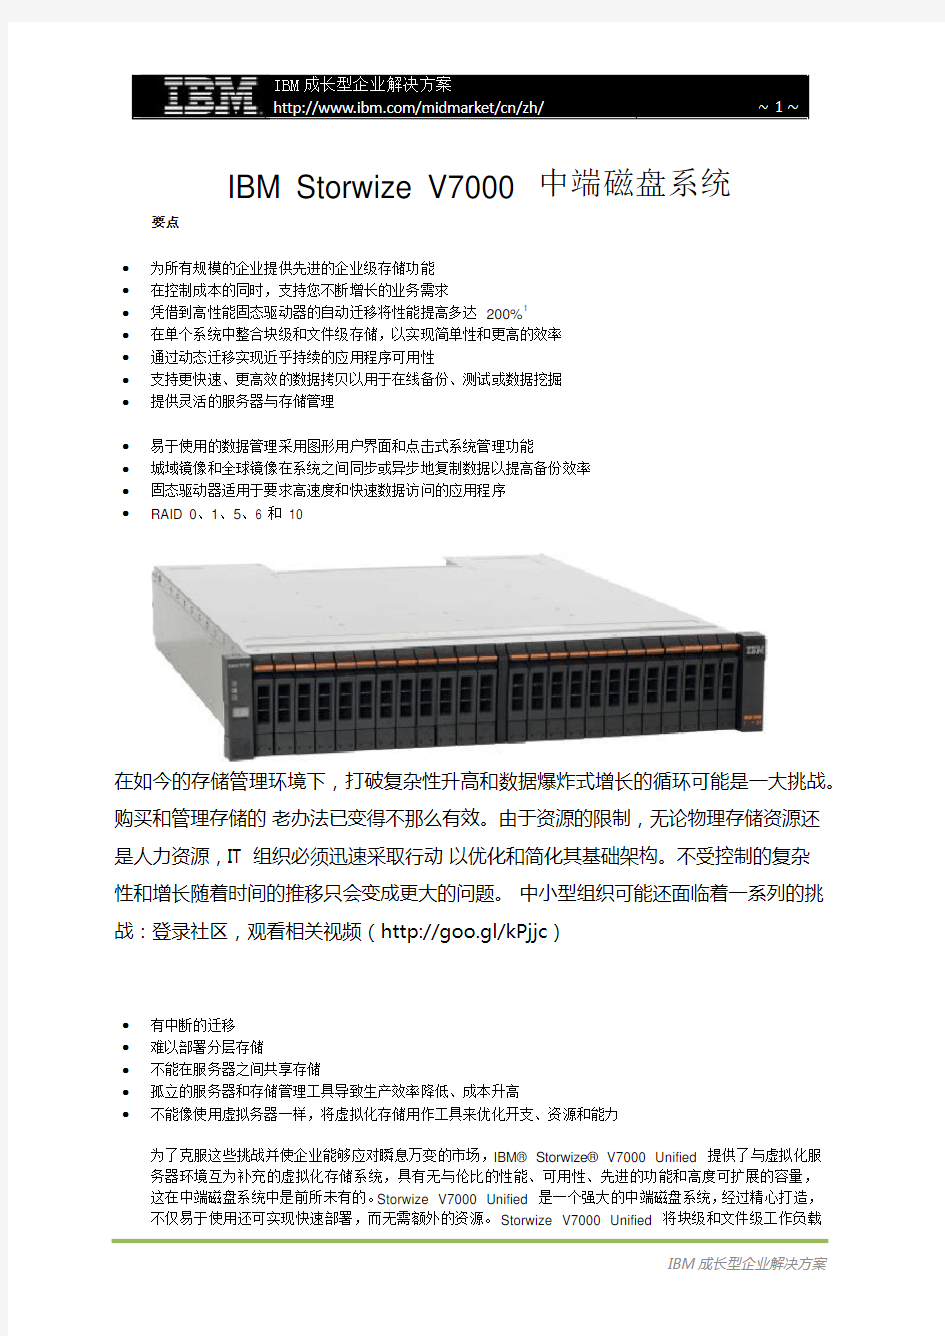 IBM Storwize V7000 技术白皮书